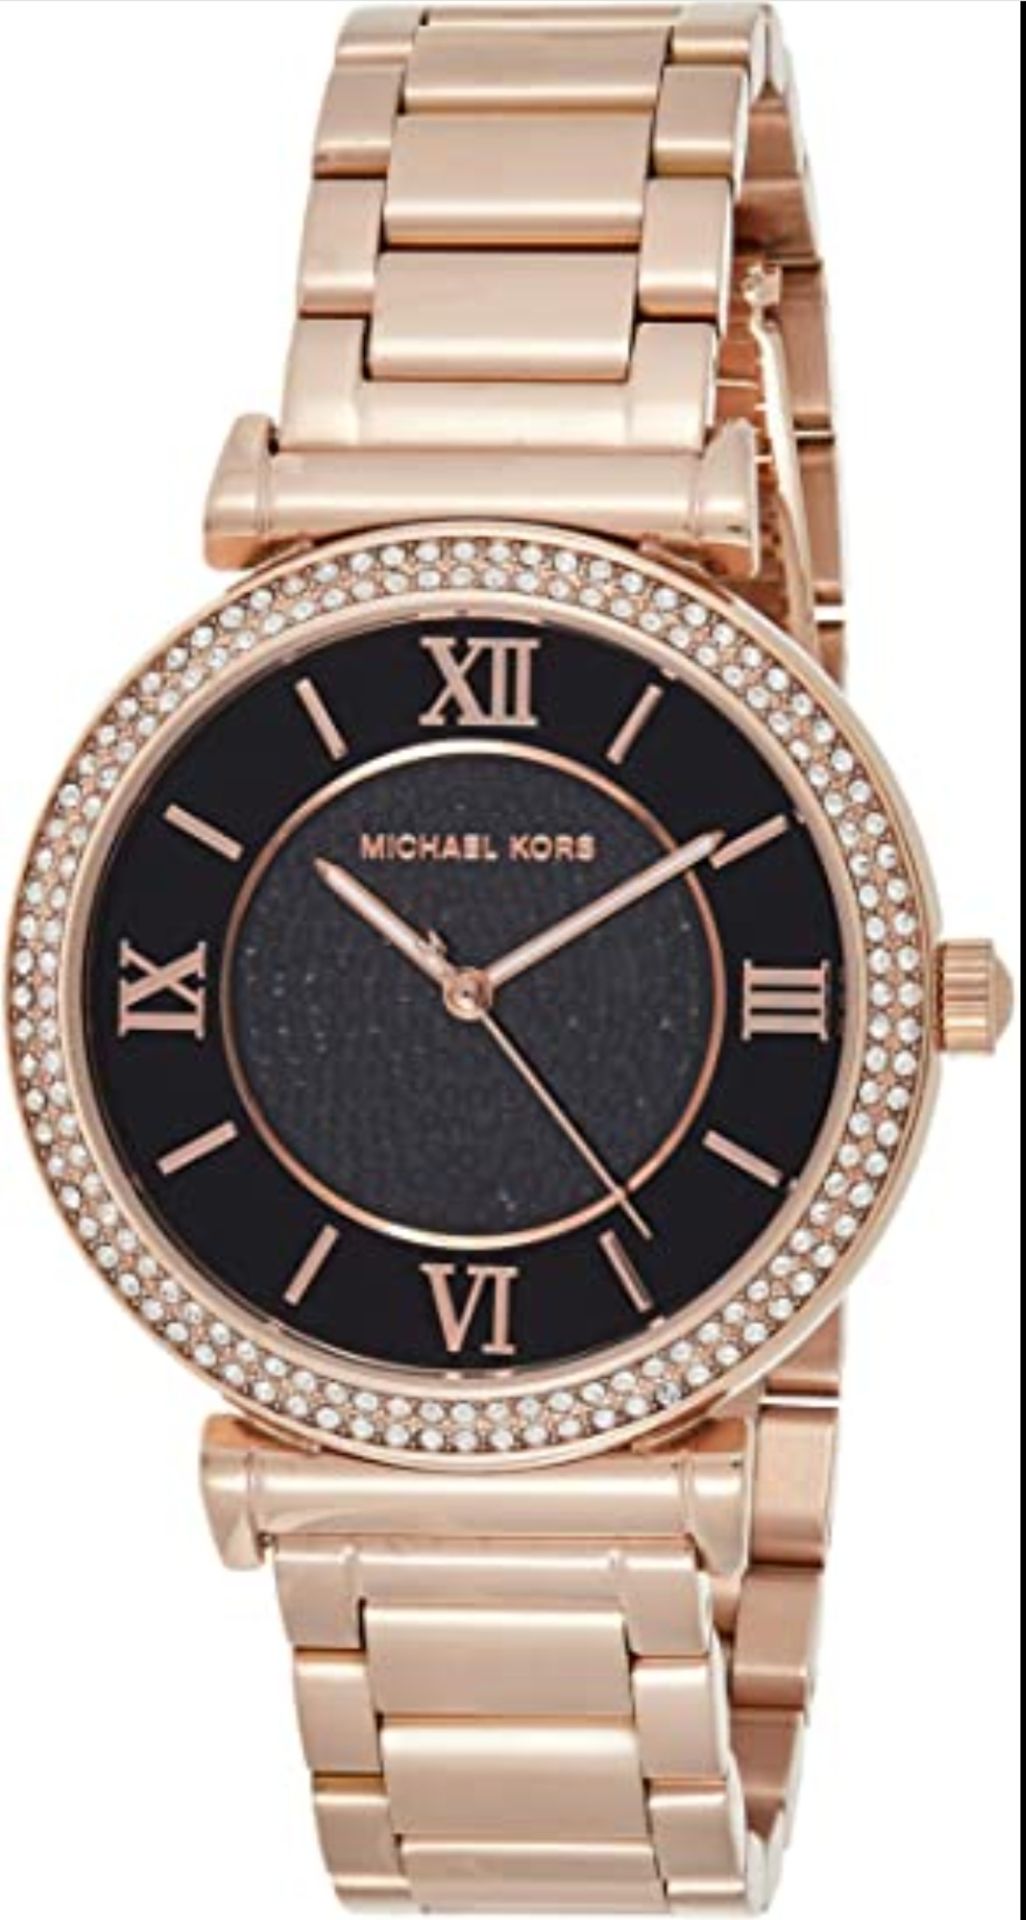 Michael Kors MK3356 Ladies Catlin Rose Gold Quartz Watch - Image 2 of 7